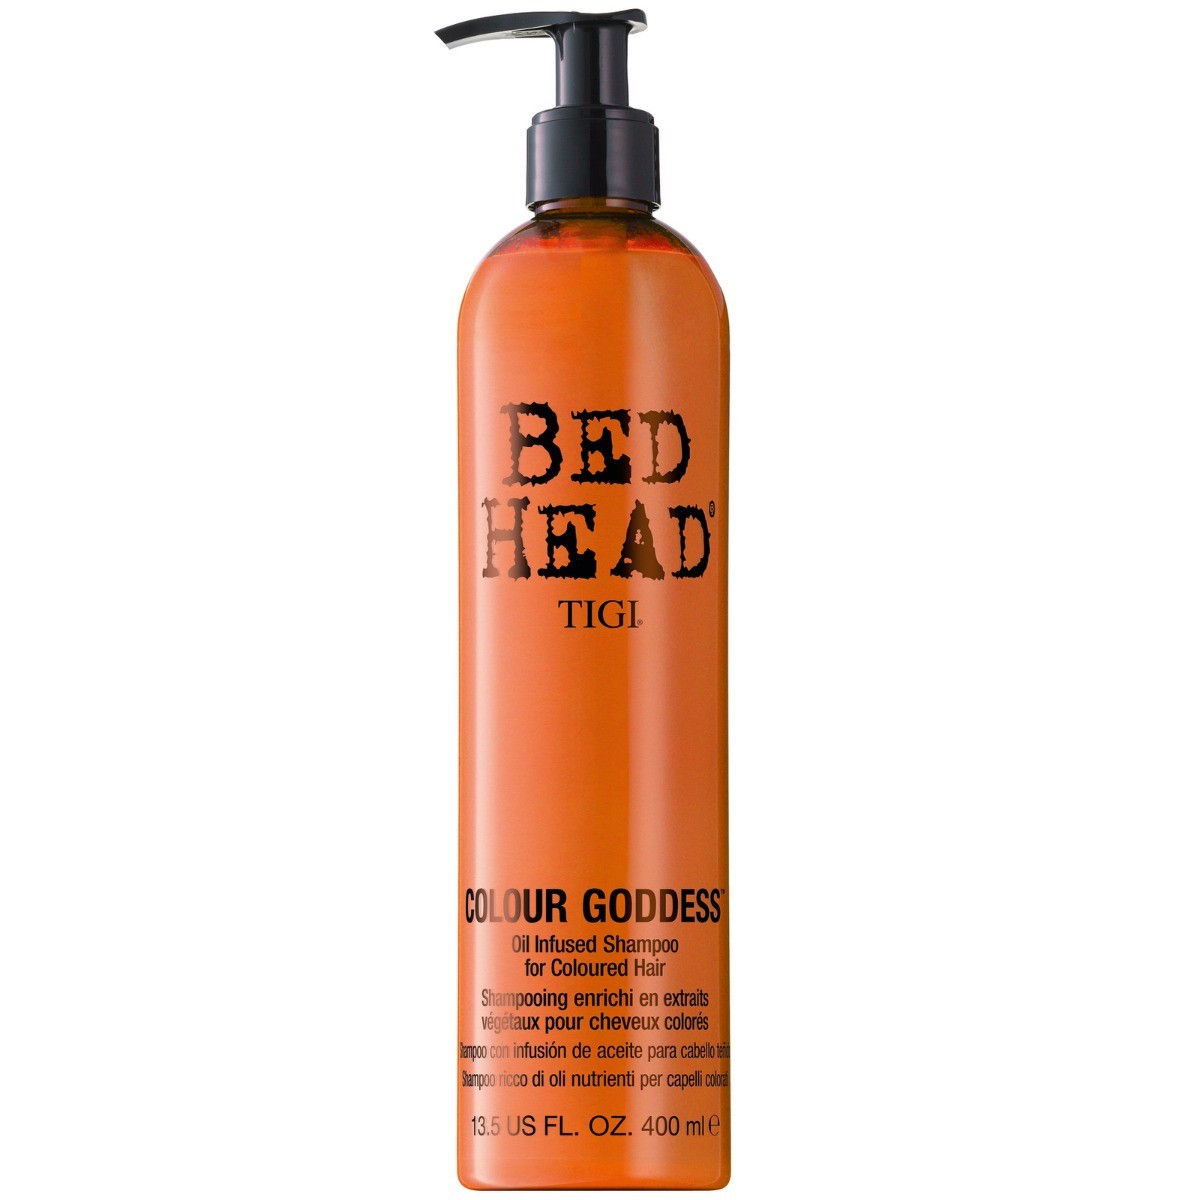 Tigi - Bed Head Colour Goddess Oil Infused Shampoo - 400ml